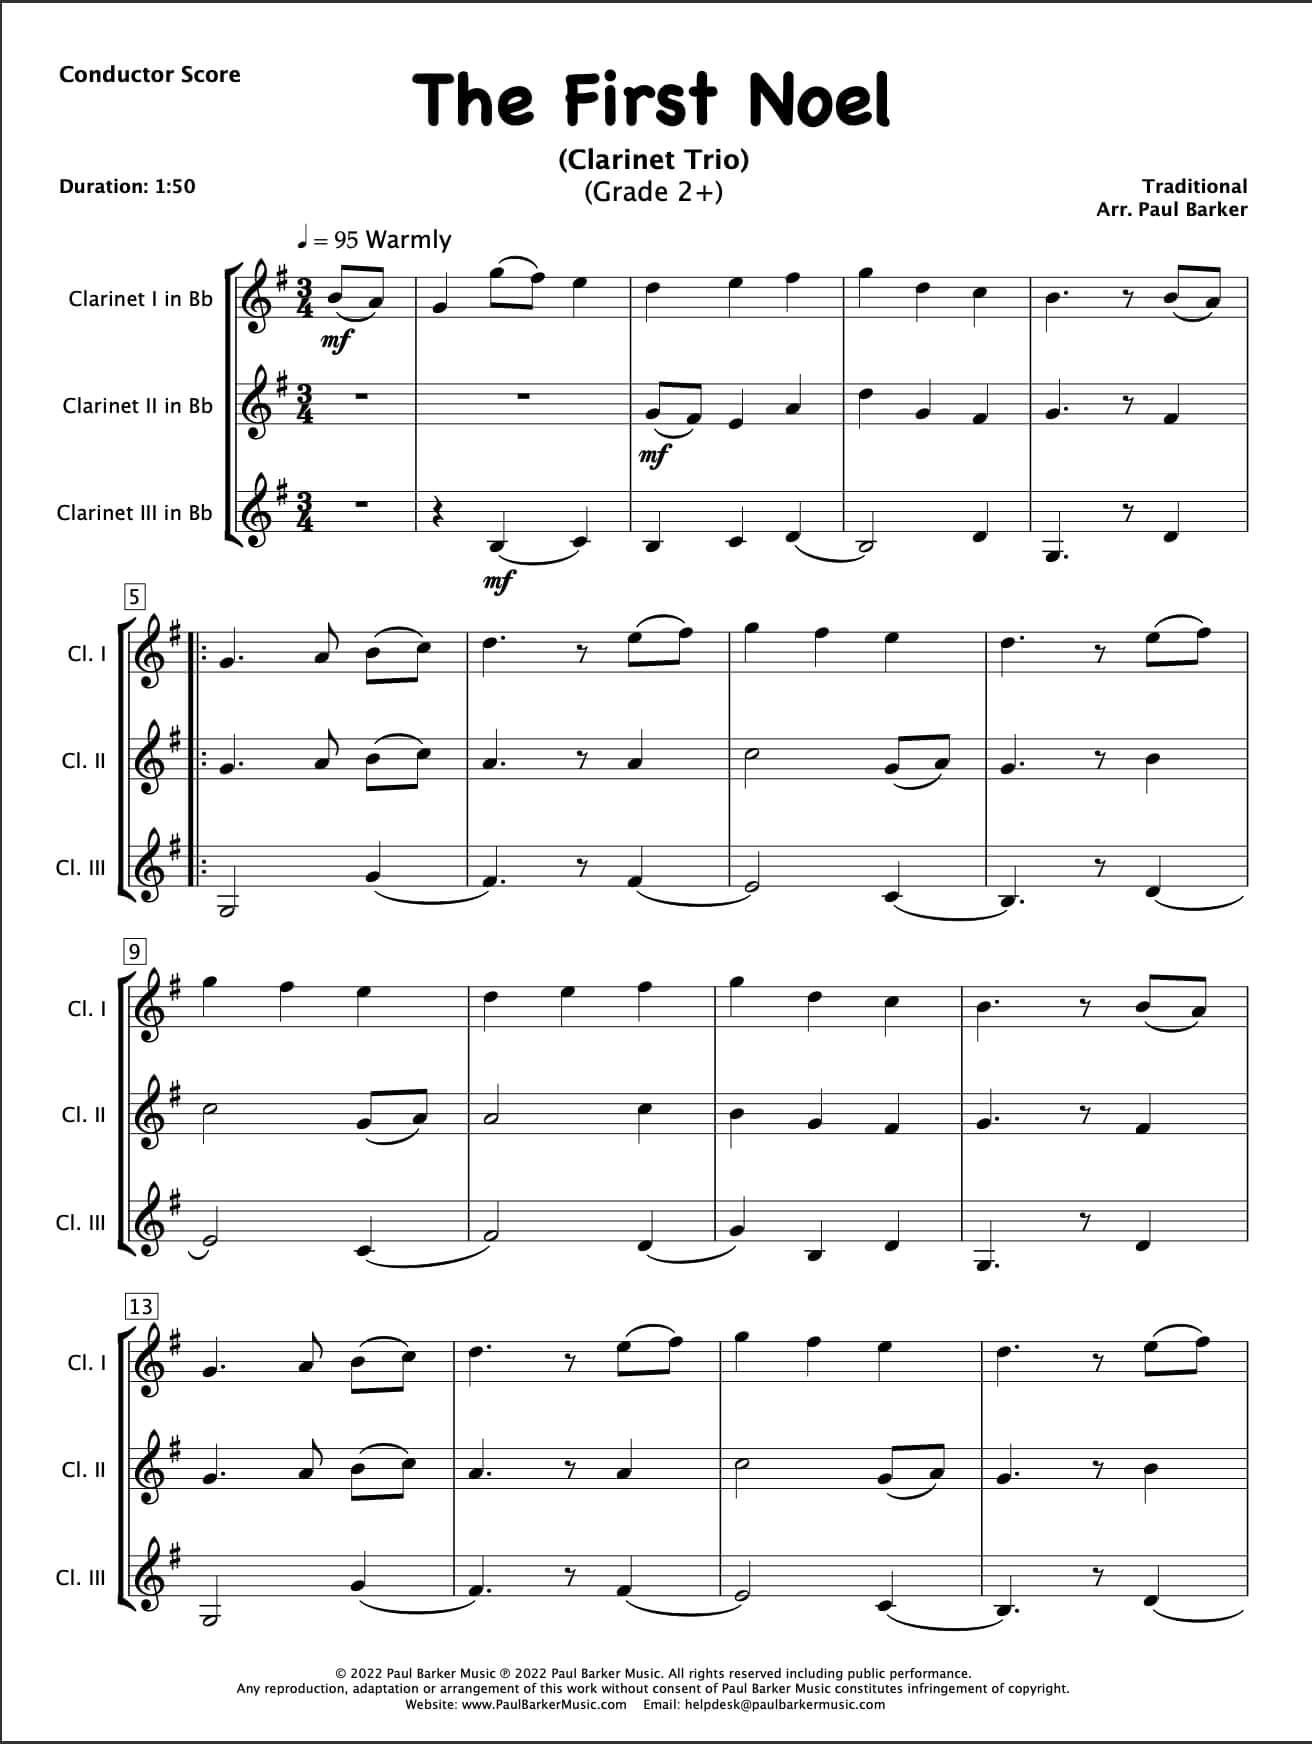 Christmas Clarinet Trios - Book 2 - Paul Barker Music 